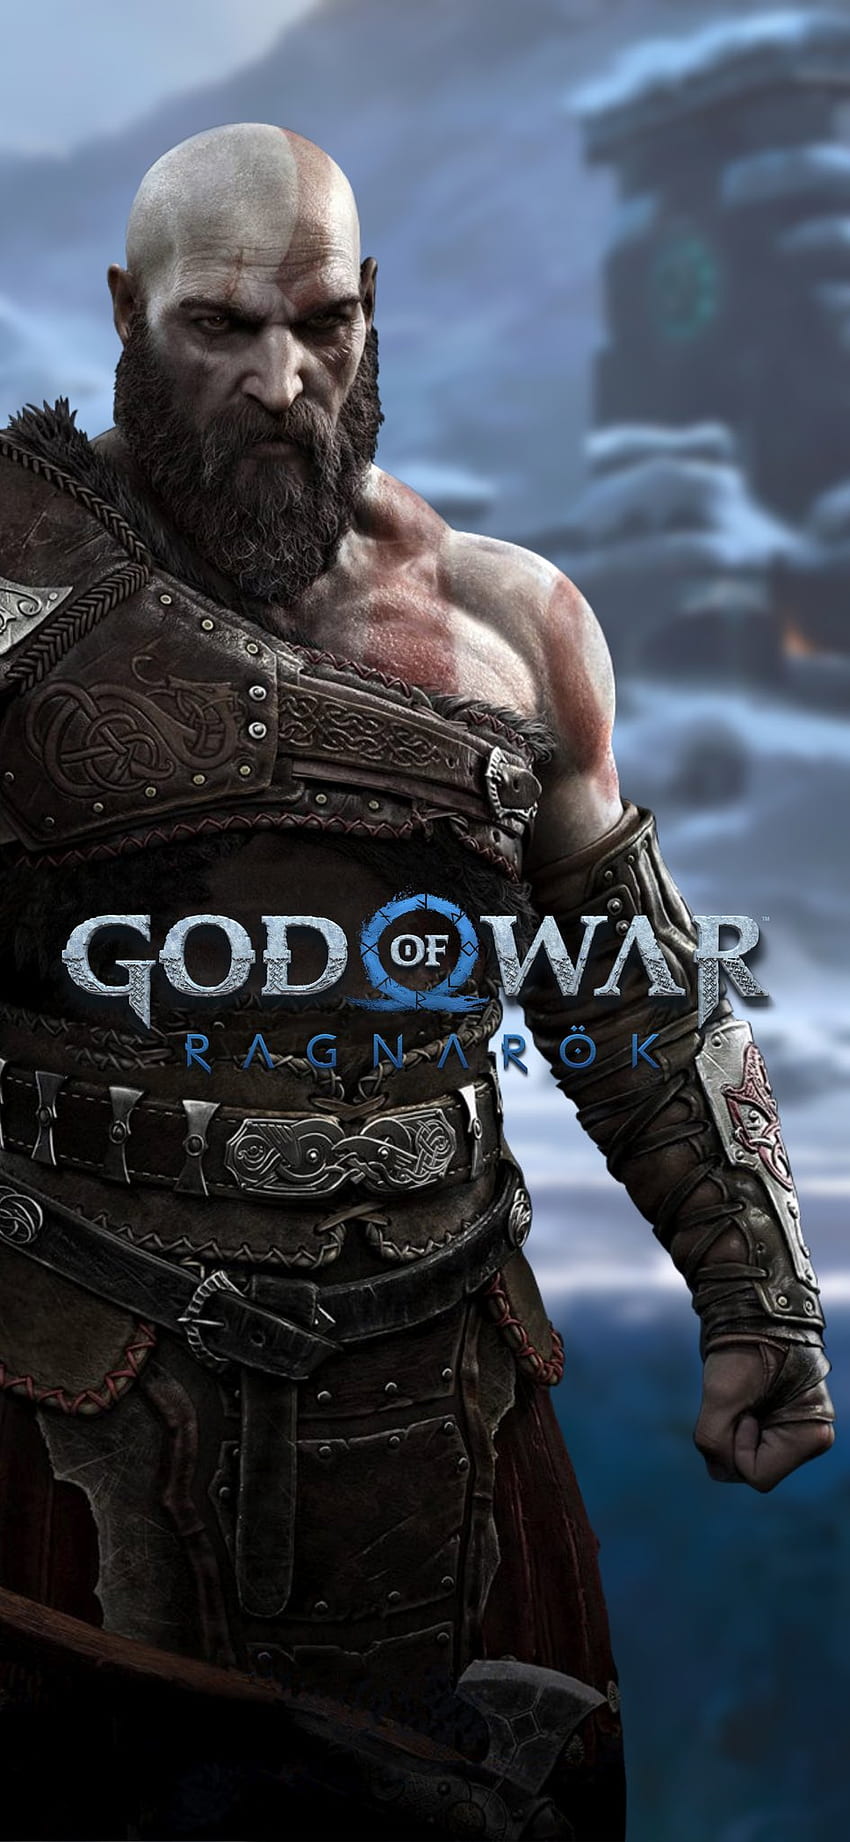 2021 god of war ragnarok iPhone Wallpapers Free Download